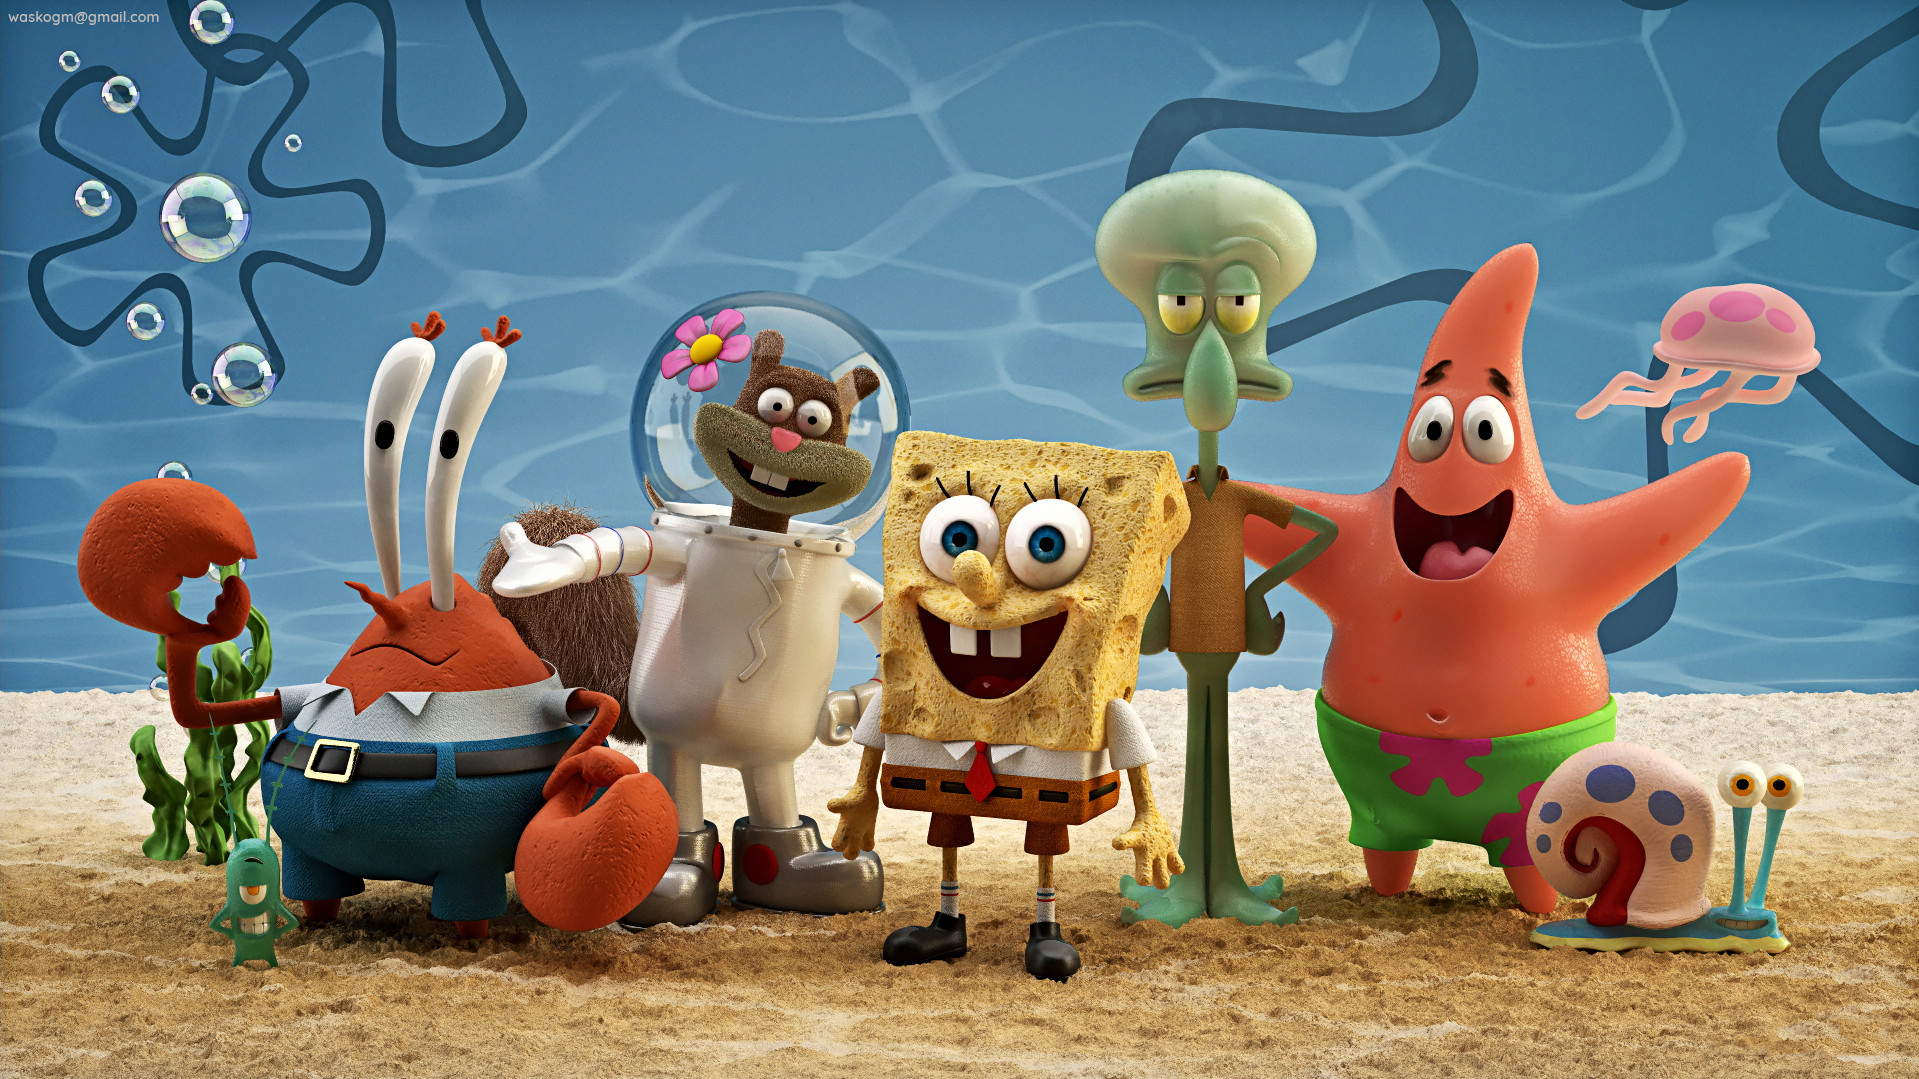 ArtStation - Spongebob Squarepants characters